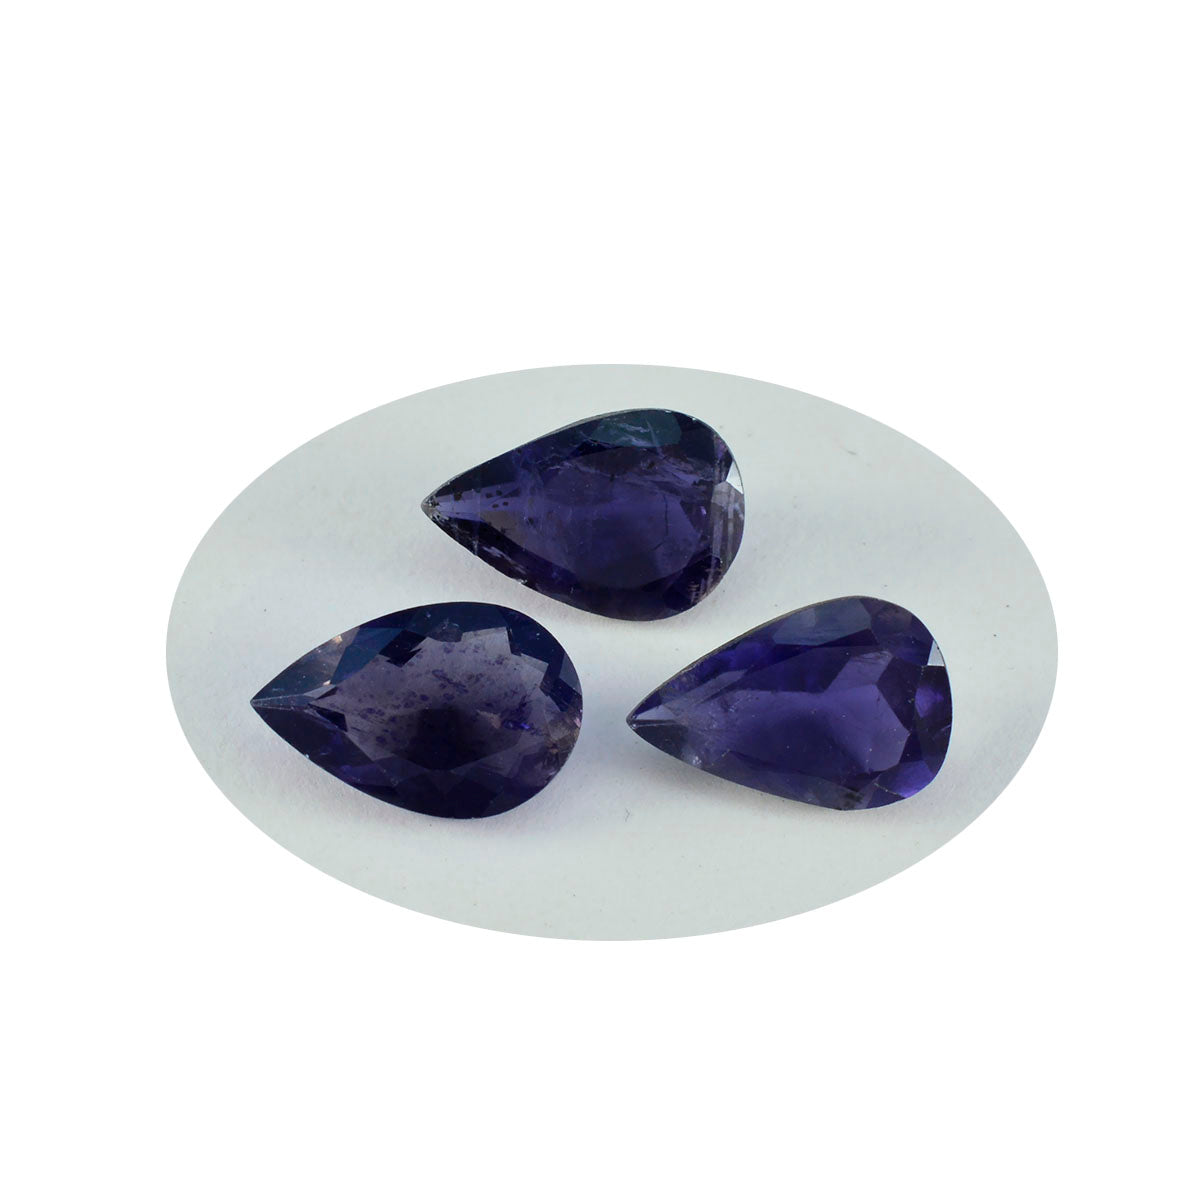 Riyogems 1PC Blue Iolite Faceted 12x16 mm Pear Shape nice-looking Quality Gem